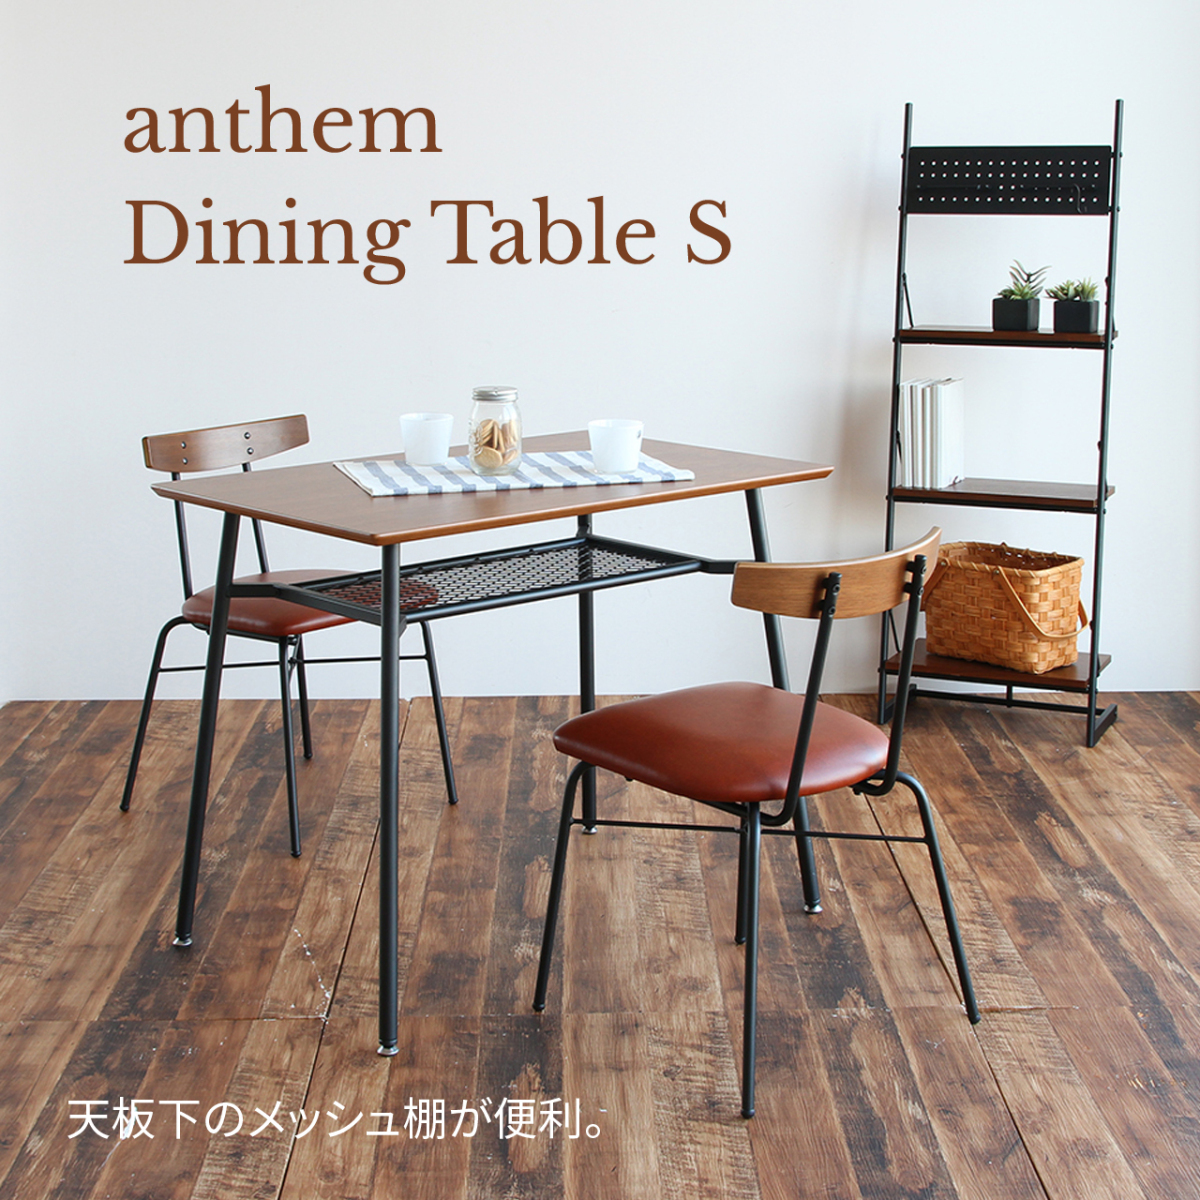  Anne sem обеденный стол anthem Dining Table S 90 см ×60 см компактный ANT-2831BR